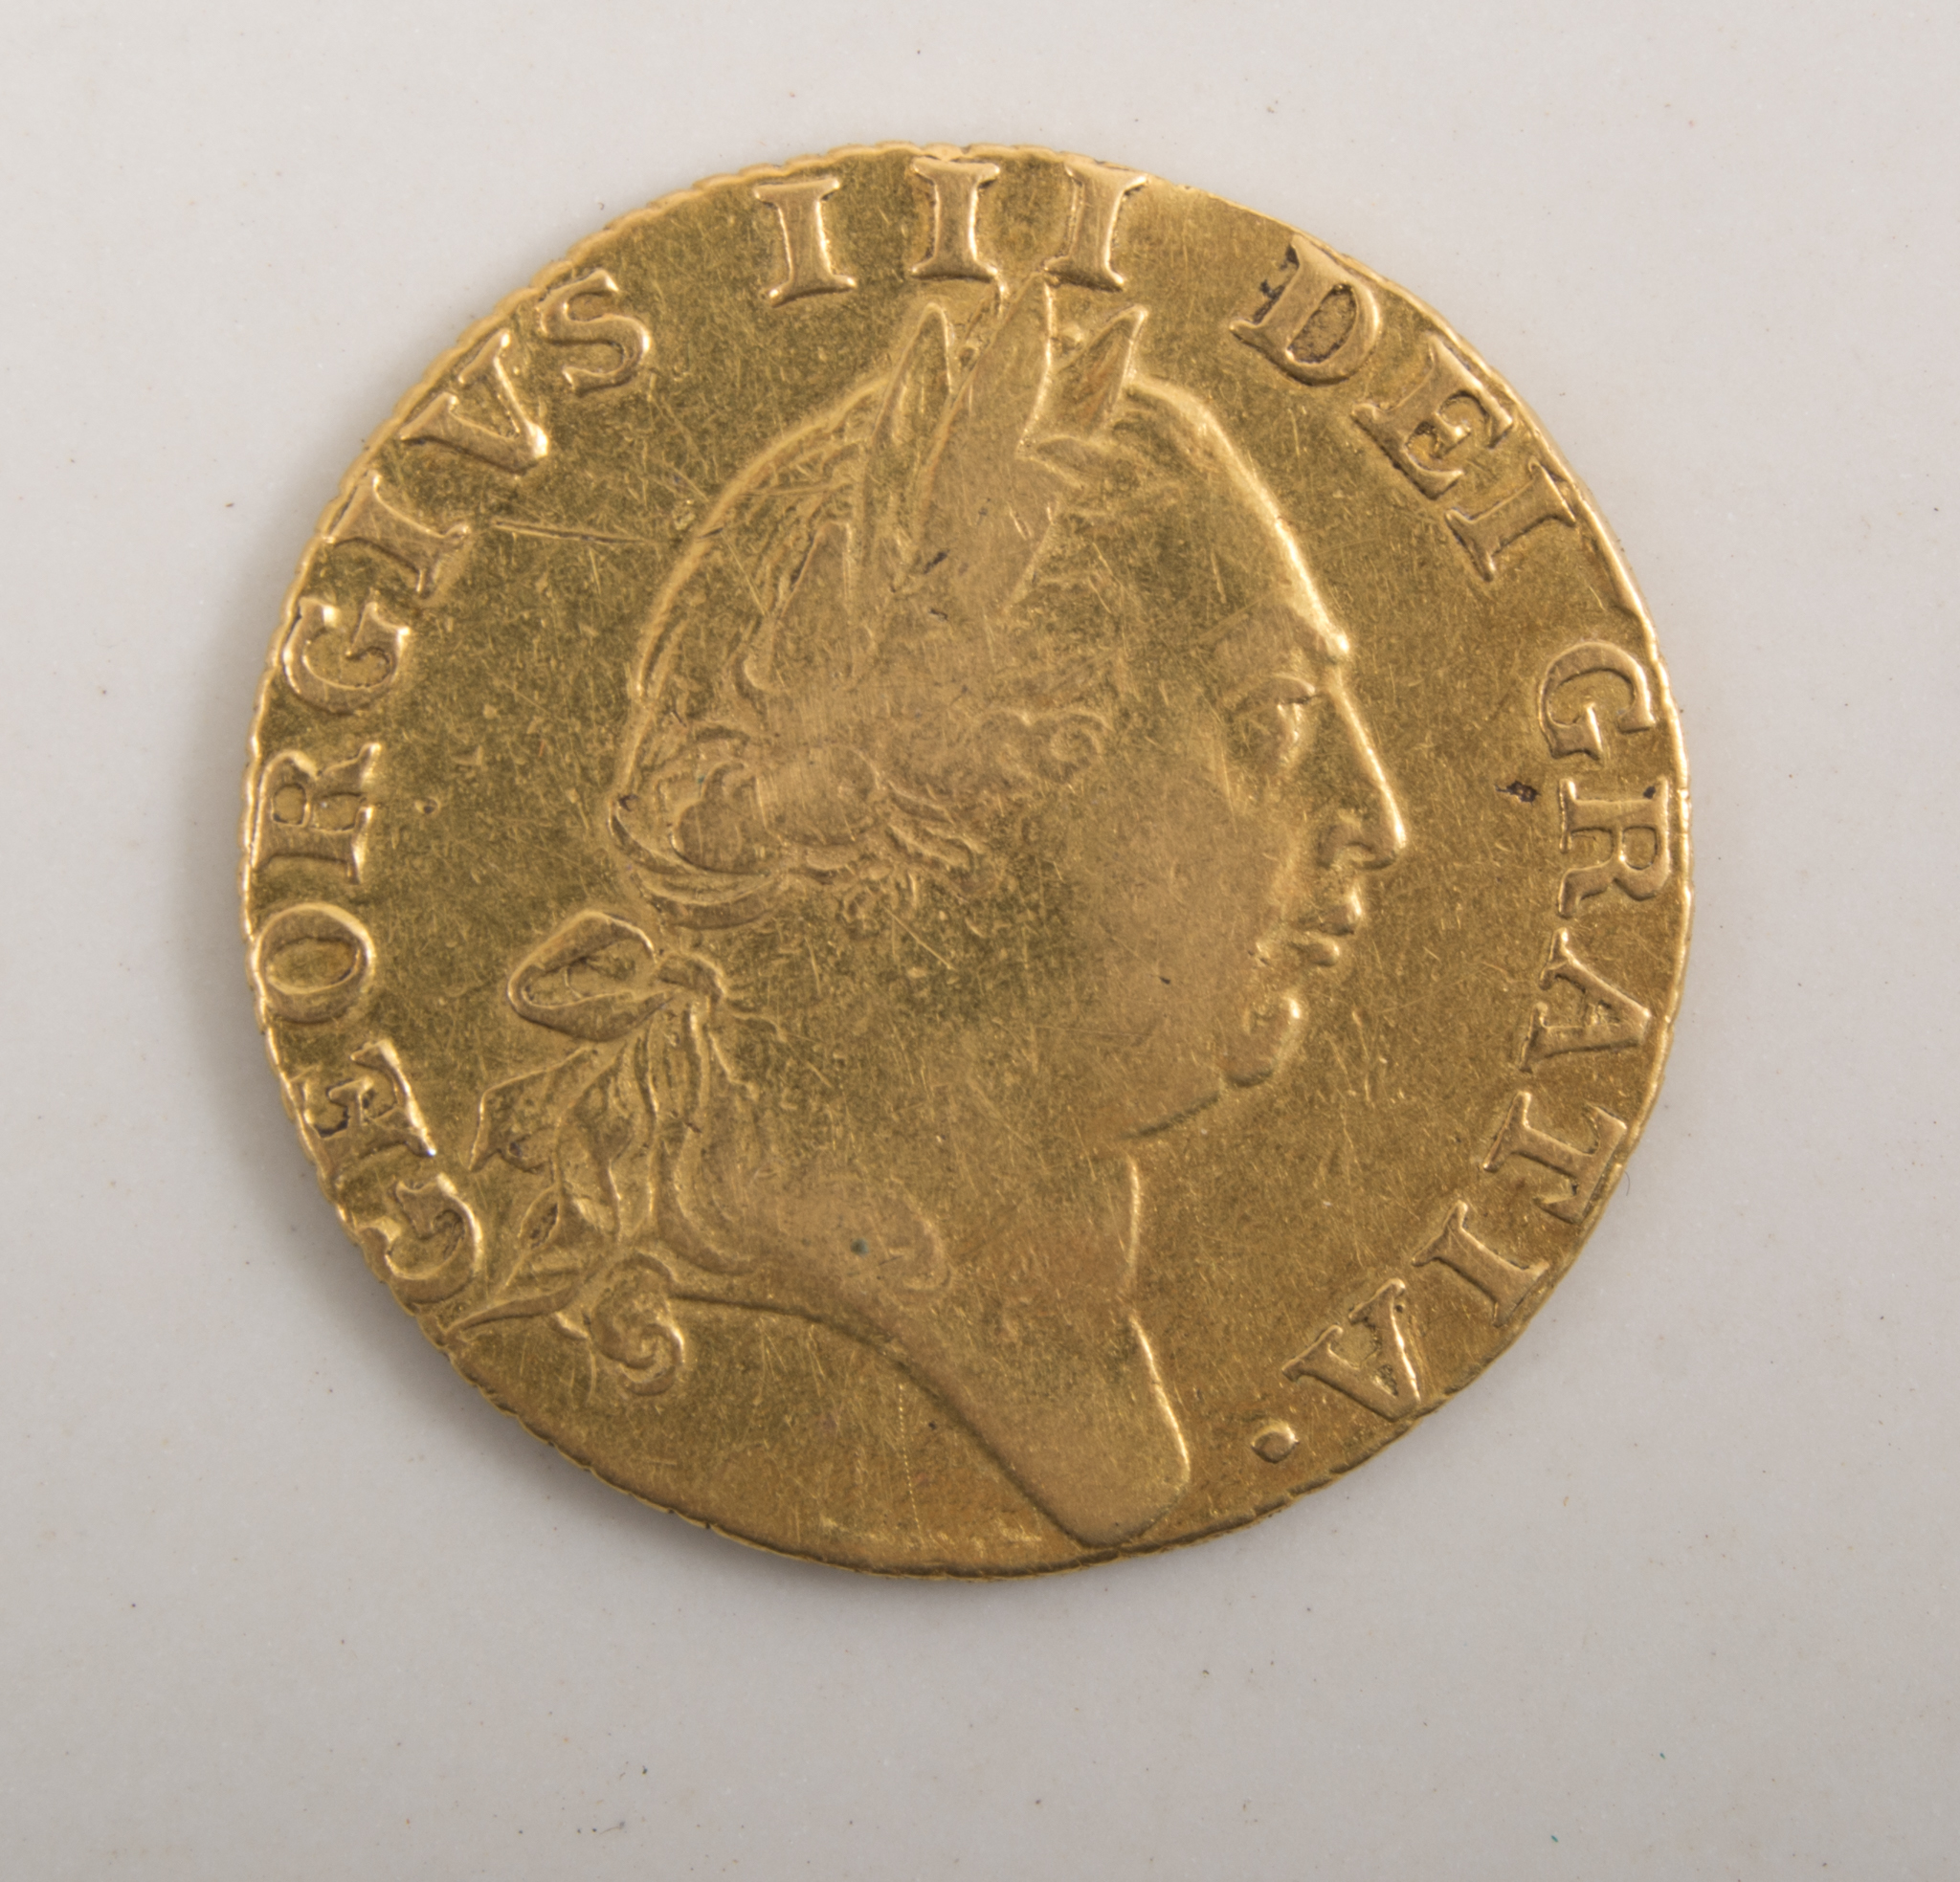 George III 1787 Spade Guinea.